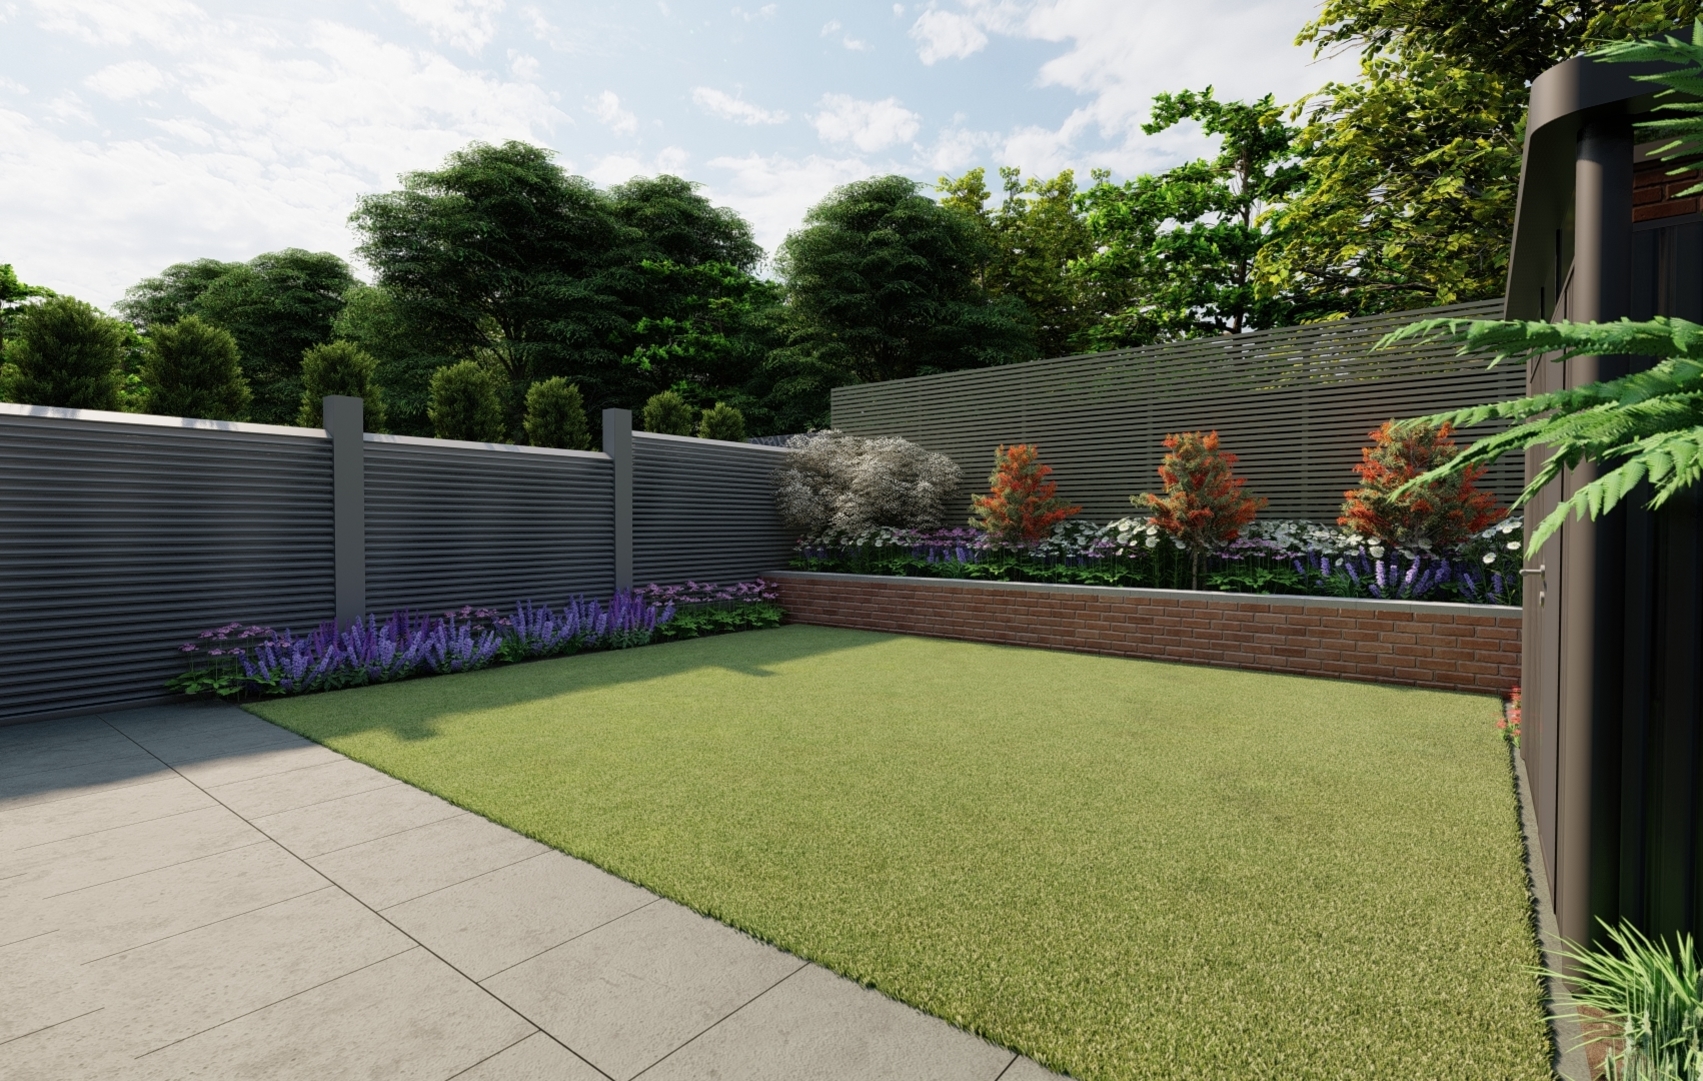 Design Ideas for Bespoke Fencing & Raised Planting Beds in Small Family Garden in Blackrock | Owen Chubb Garden Design services. Tel 087-2306 128